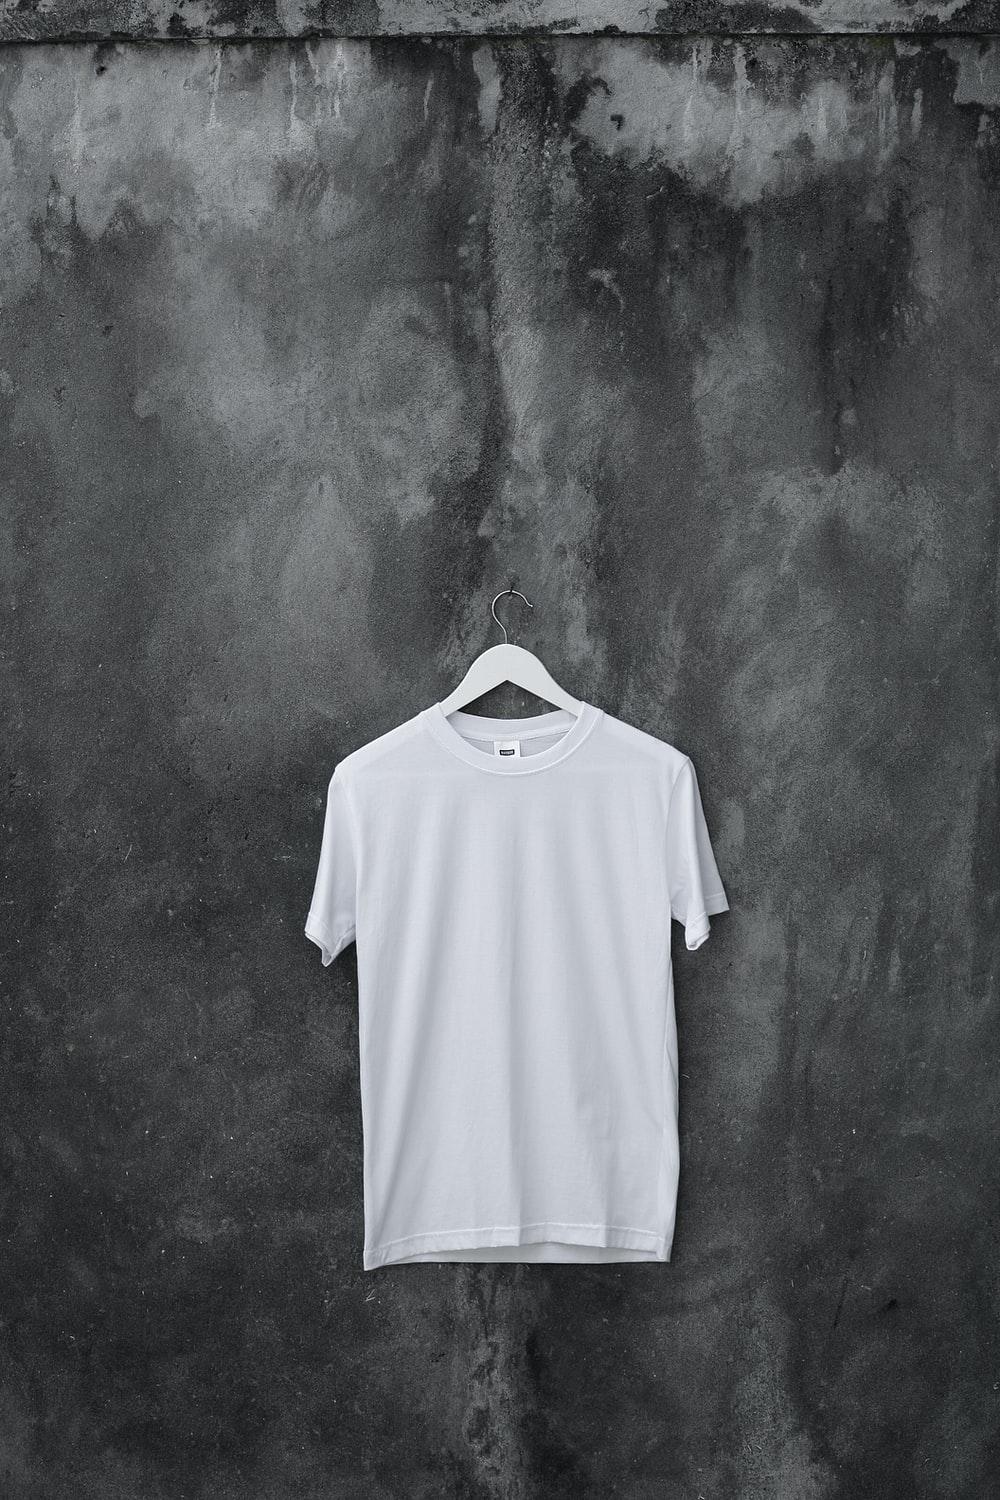 plain white shirt for editing